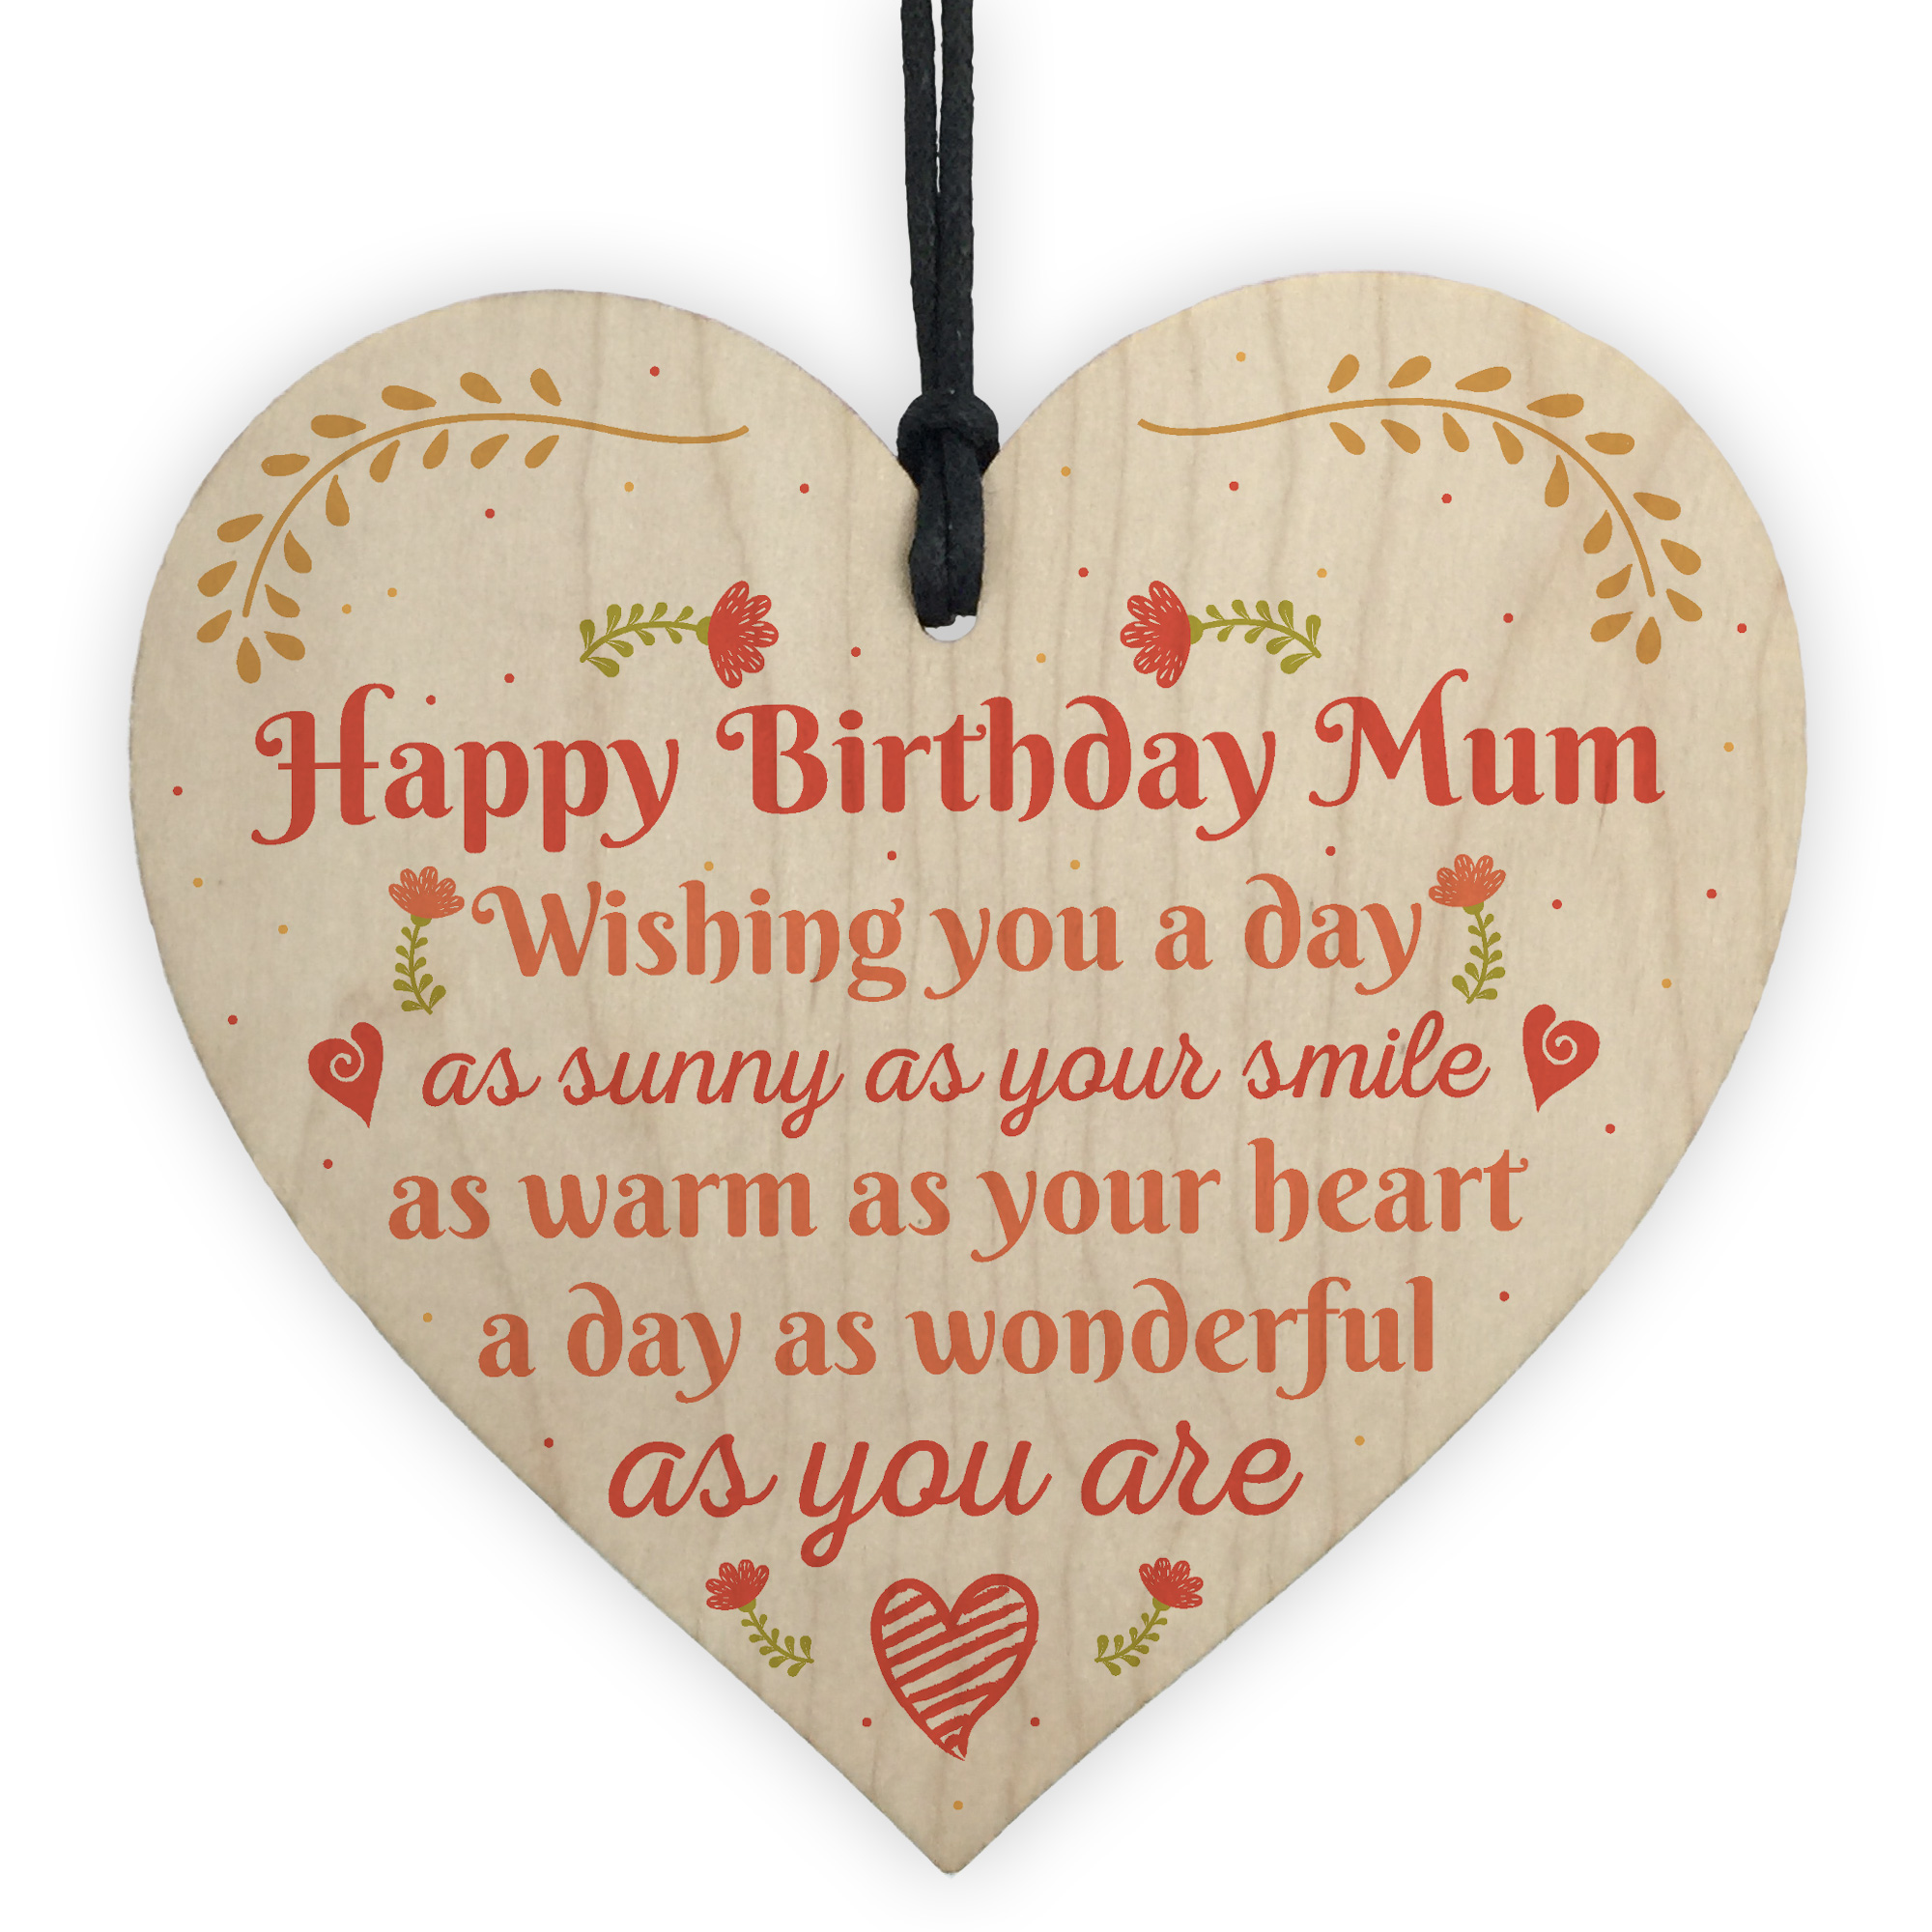 Handmade Wooden Hanging Heart Plaque Gift Novelty Funny Old Birthday Keepsake